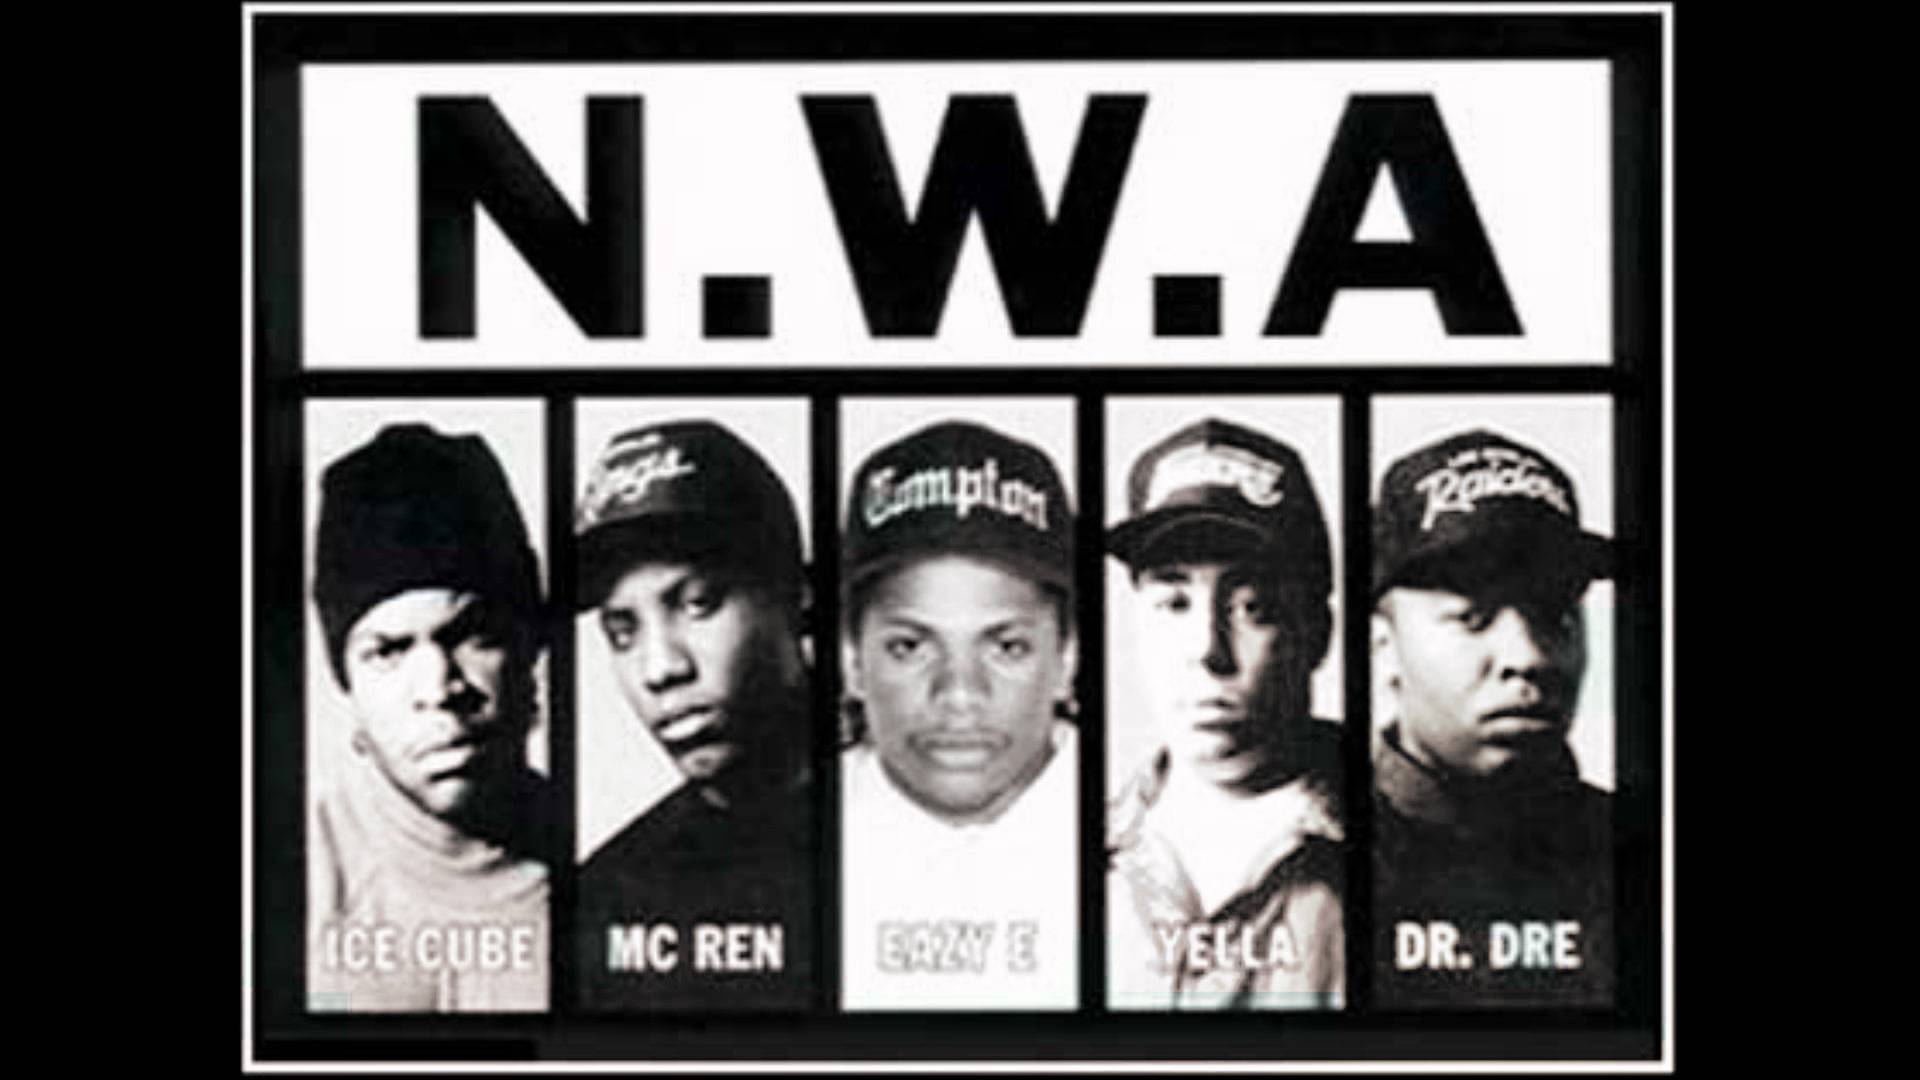 STRAIGHT OUTTA COMPTON rap rapper hip hop gangsta nwa biography drama music  1soc poster wallpaper  2000x2000  789317  WallpaperUP